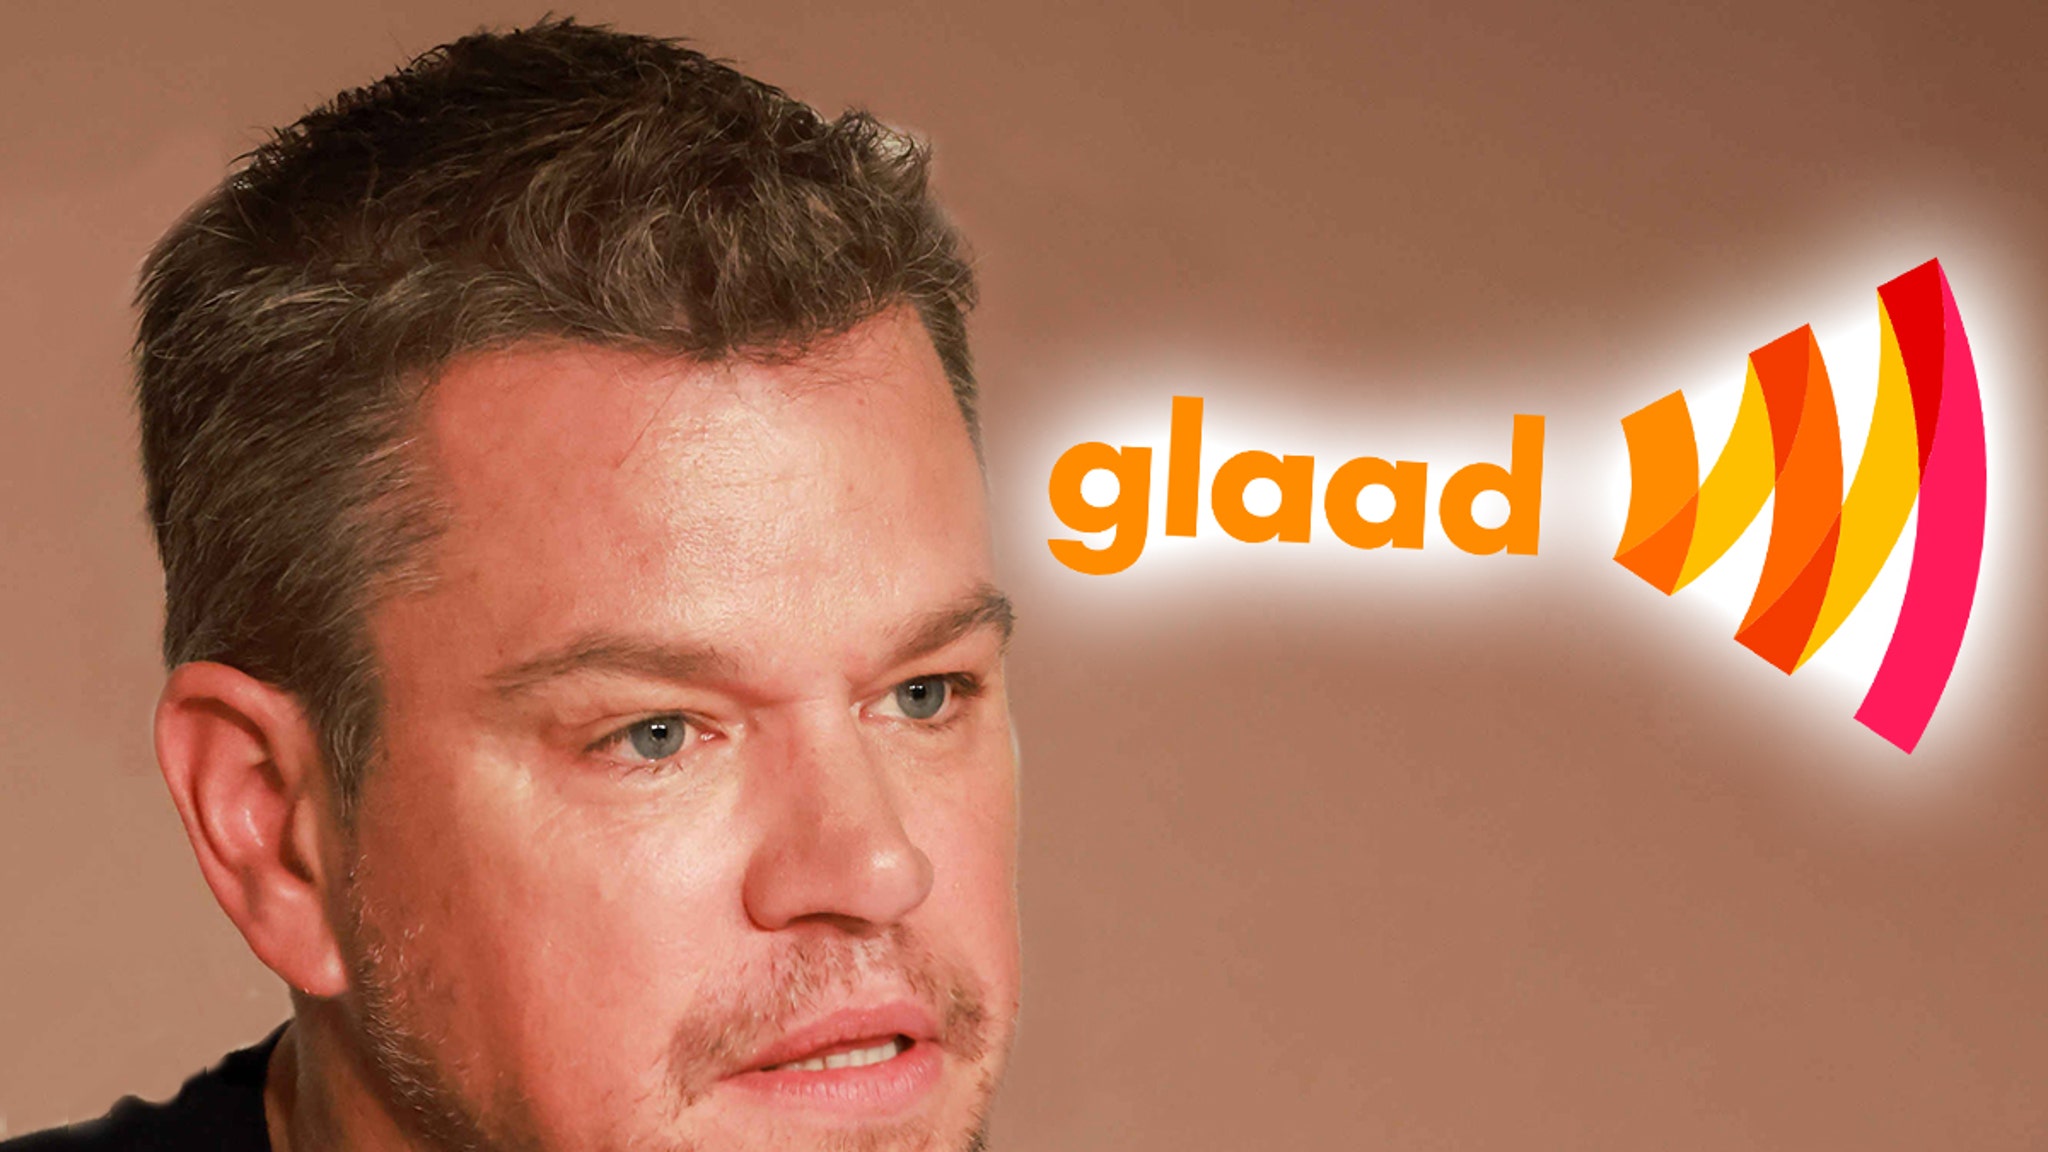 GLAAD Calls for Accountability After Matt Damon's Homophobic Slur Remarks